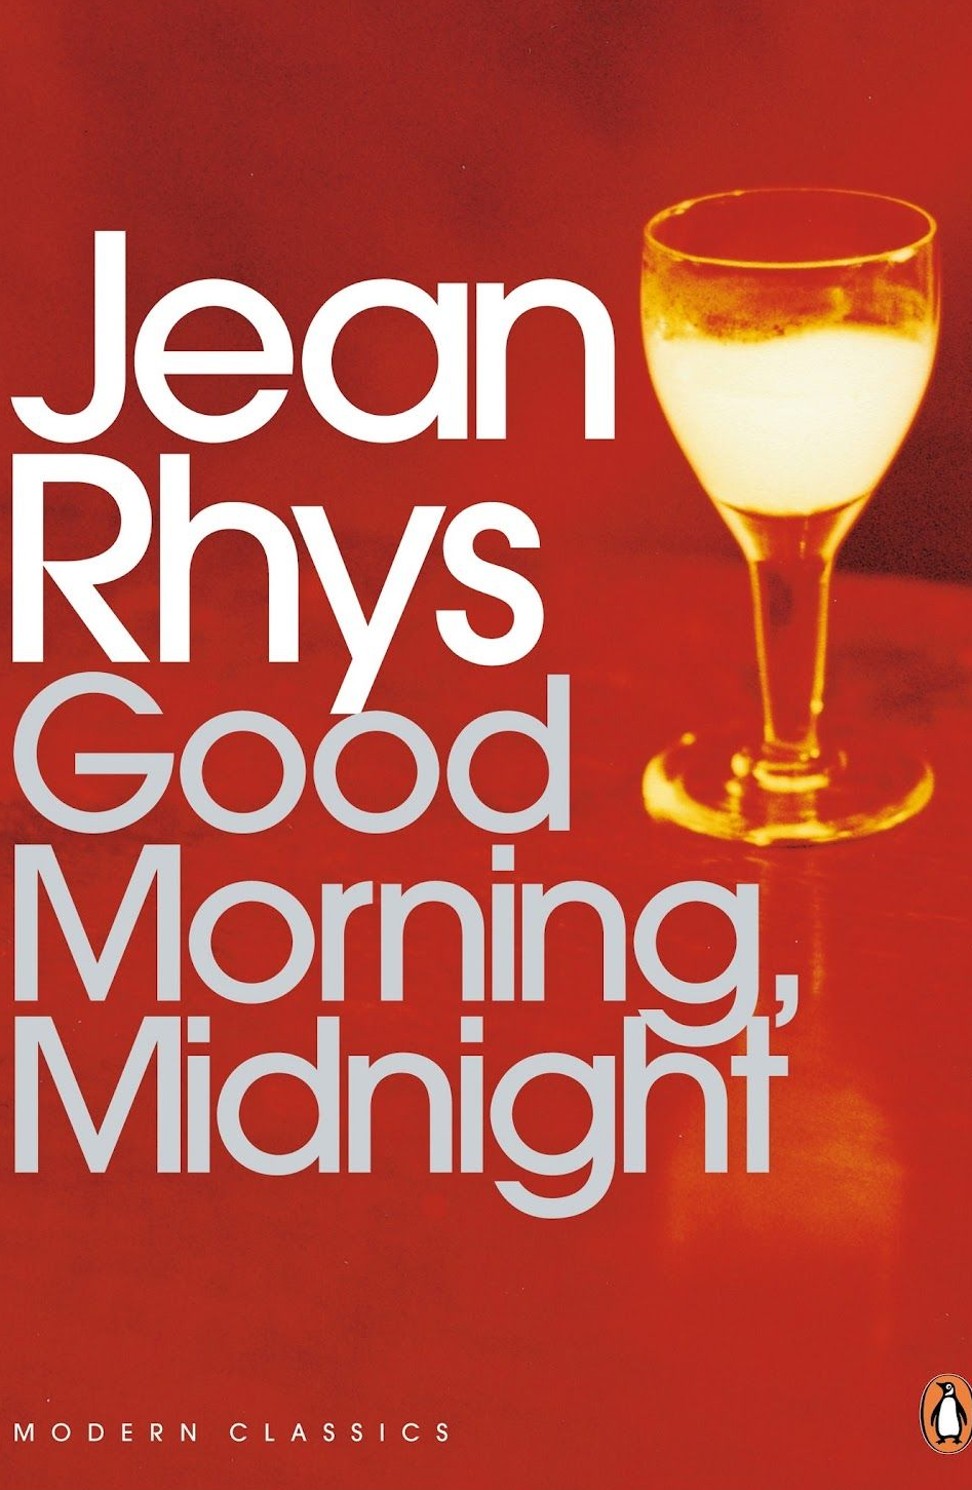 Good Morning Midnight, by Jean Rhys.